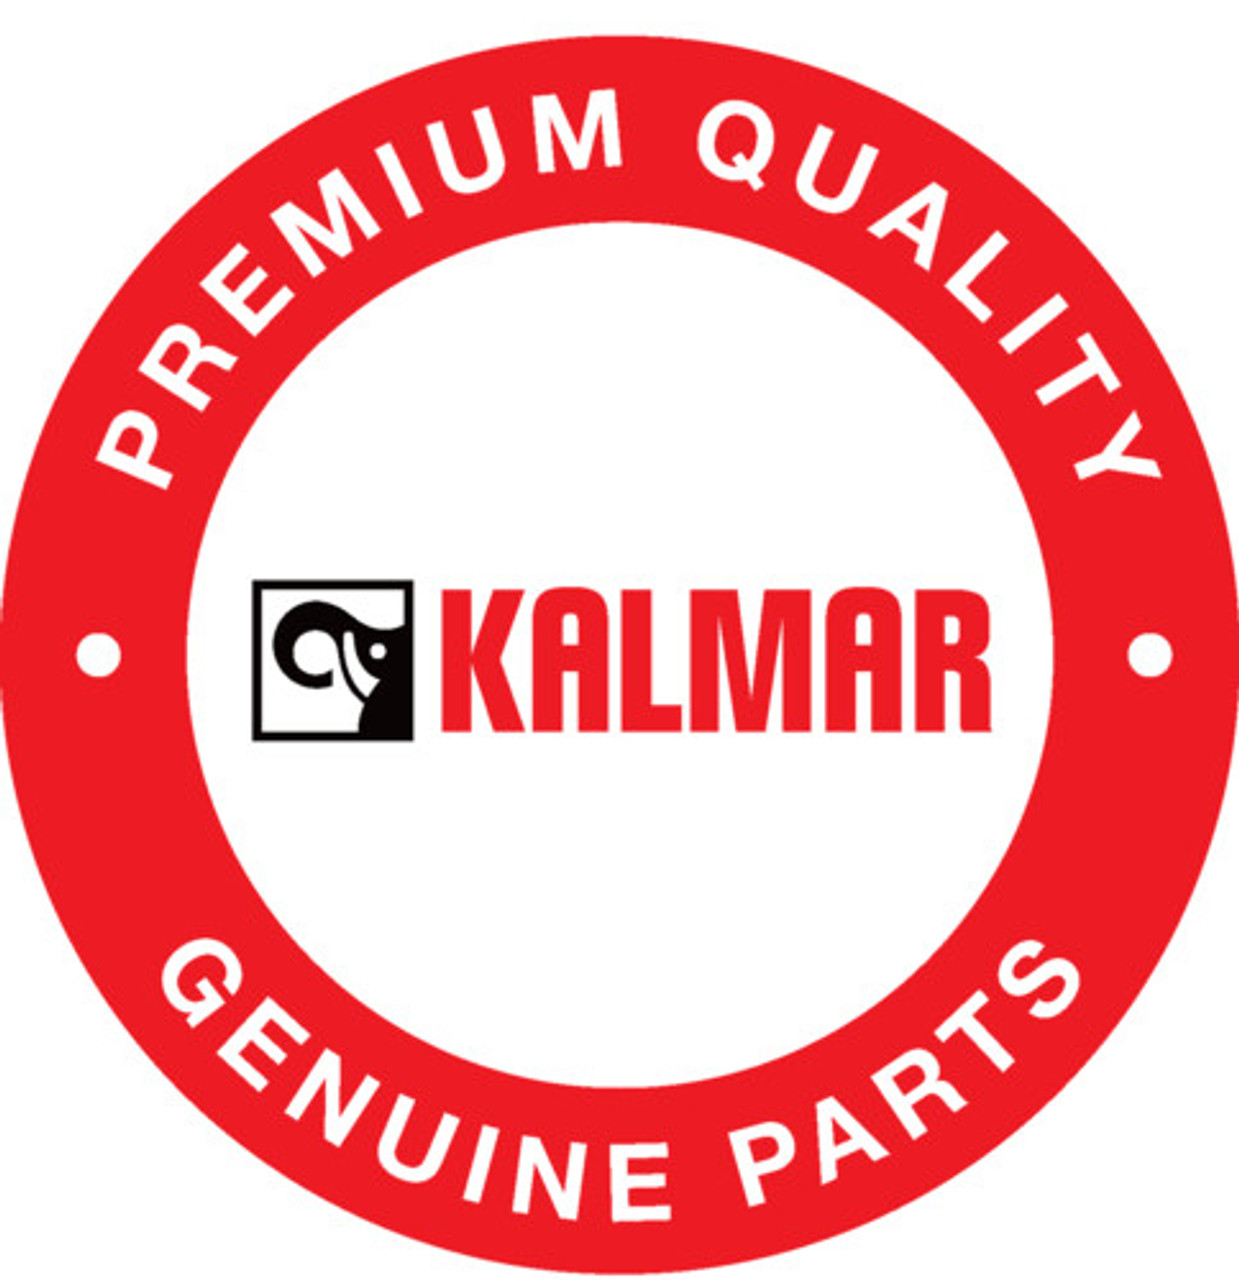 J024548: Kalmar® Counterpiece